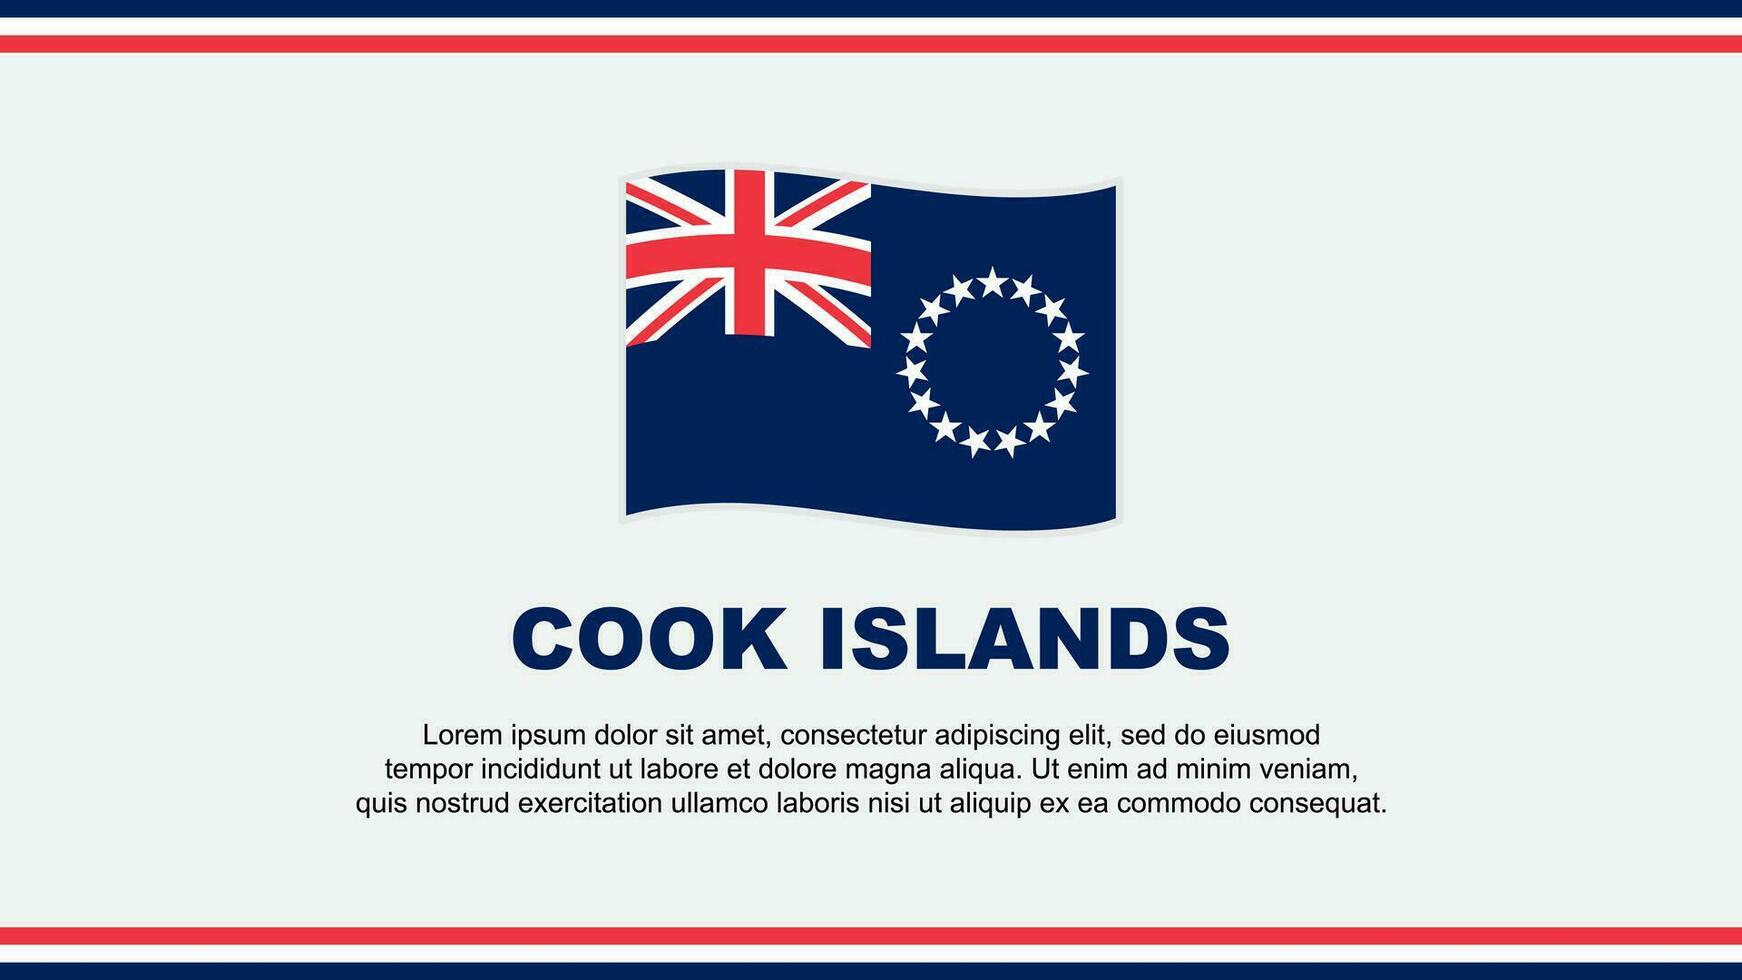 Cook Islands Flag Abstract Background Design Template. Cook Islands Independence Day Banner Social Media Vector Illustration. Cook Islands Design